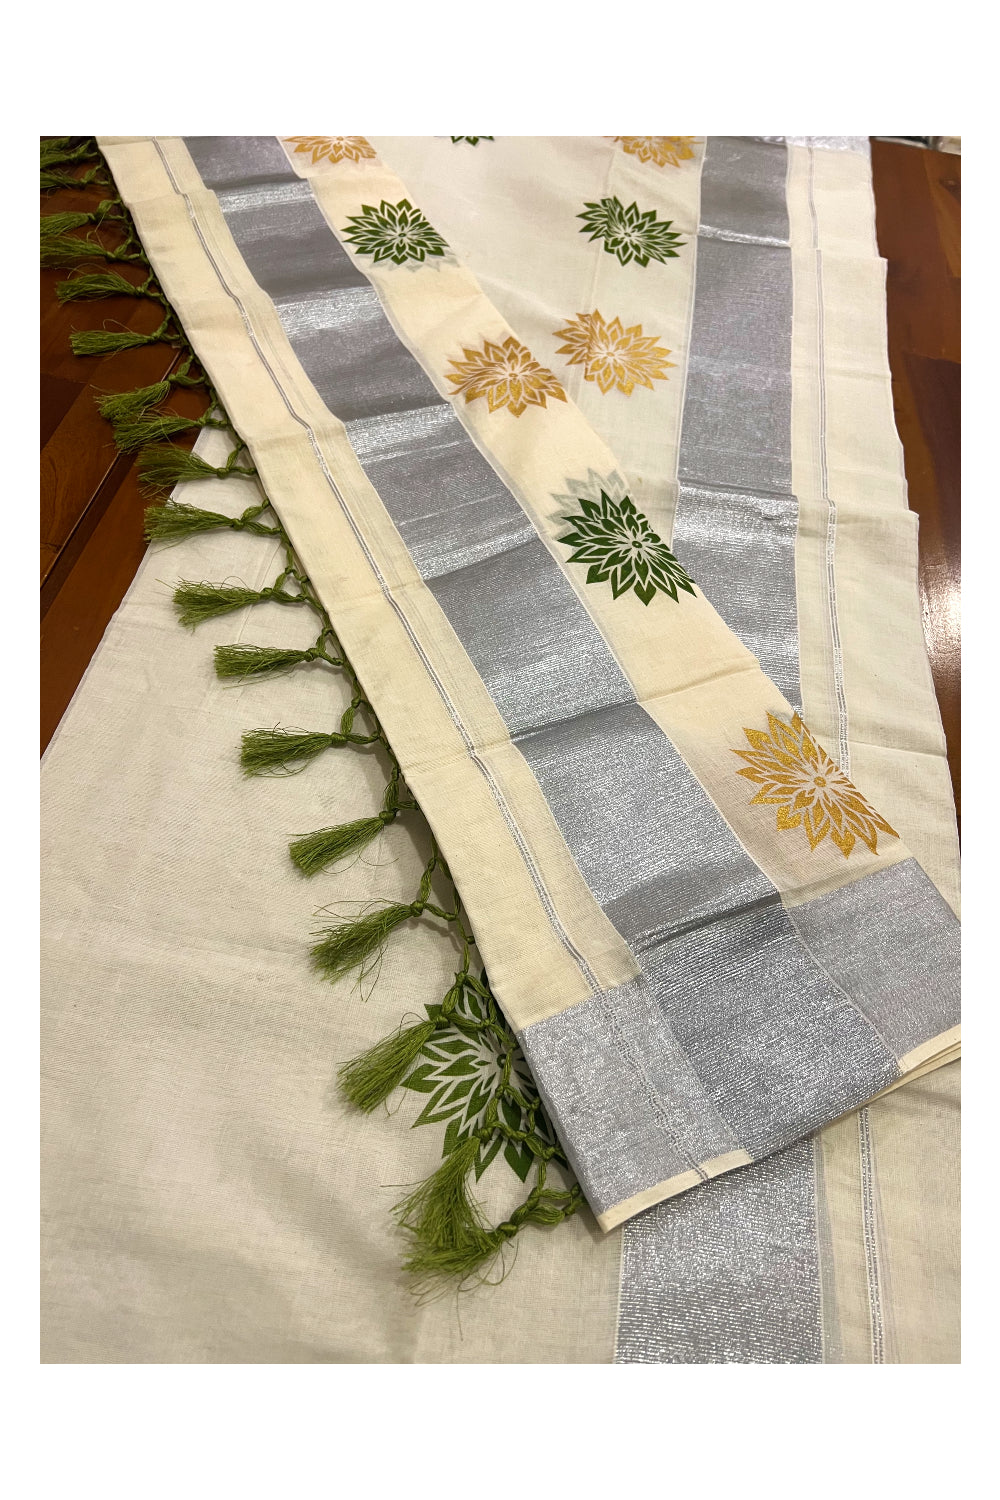 Kerala Cotton Mundum Neriyathum Single (Set Mundu) with Light Green and Golden Floral Block Prints